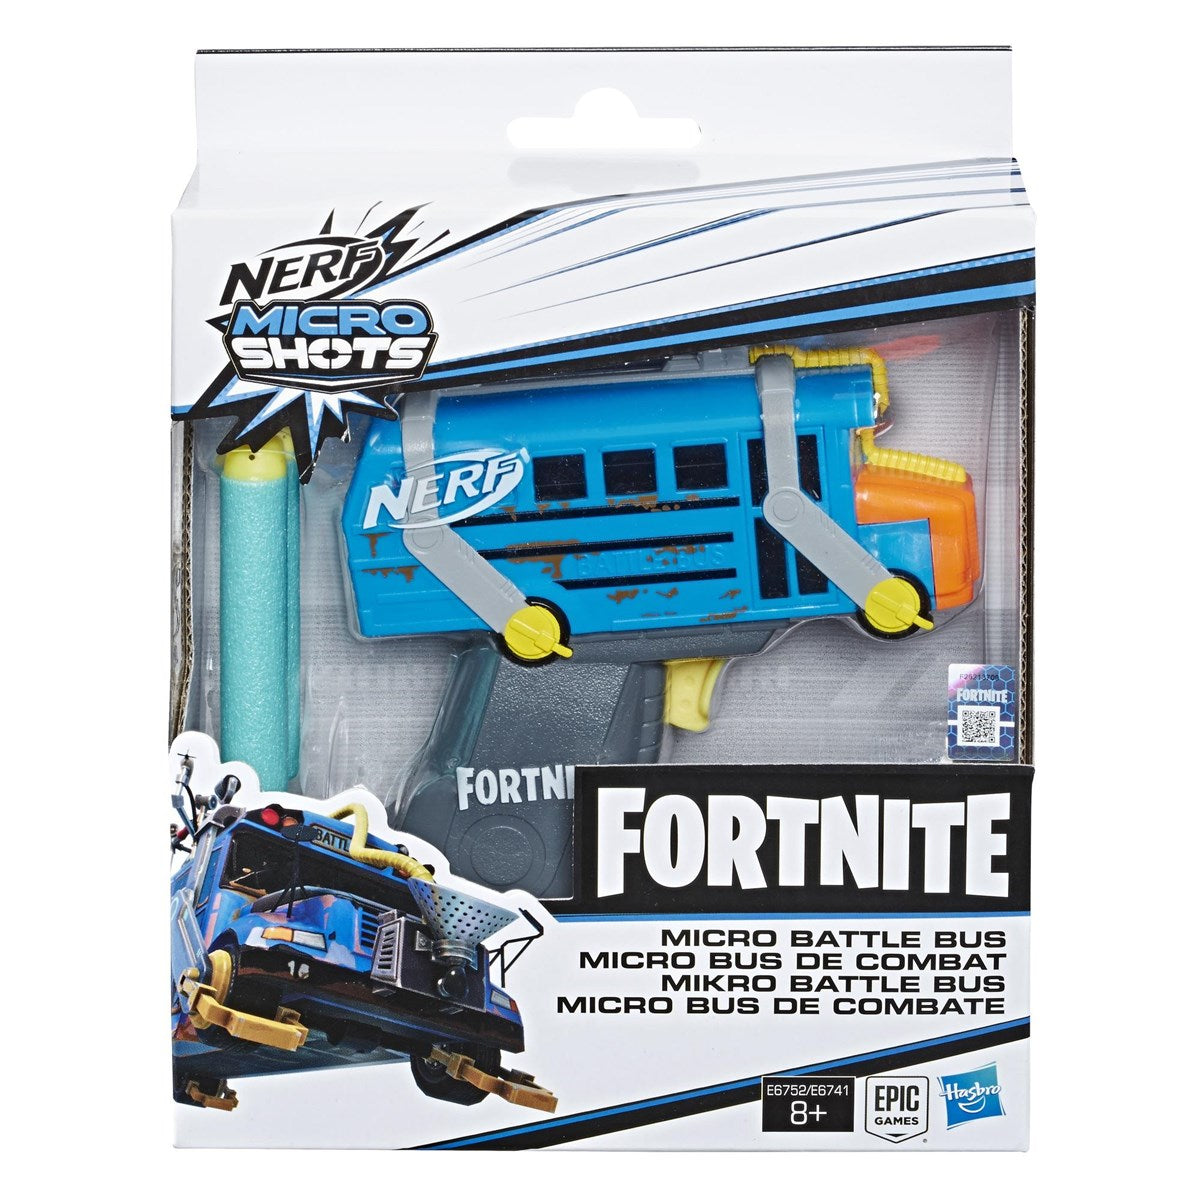 Nerf Microshots Fortnite Micro Battle Bus E6752 E6741 | Toysall